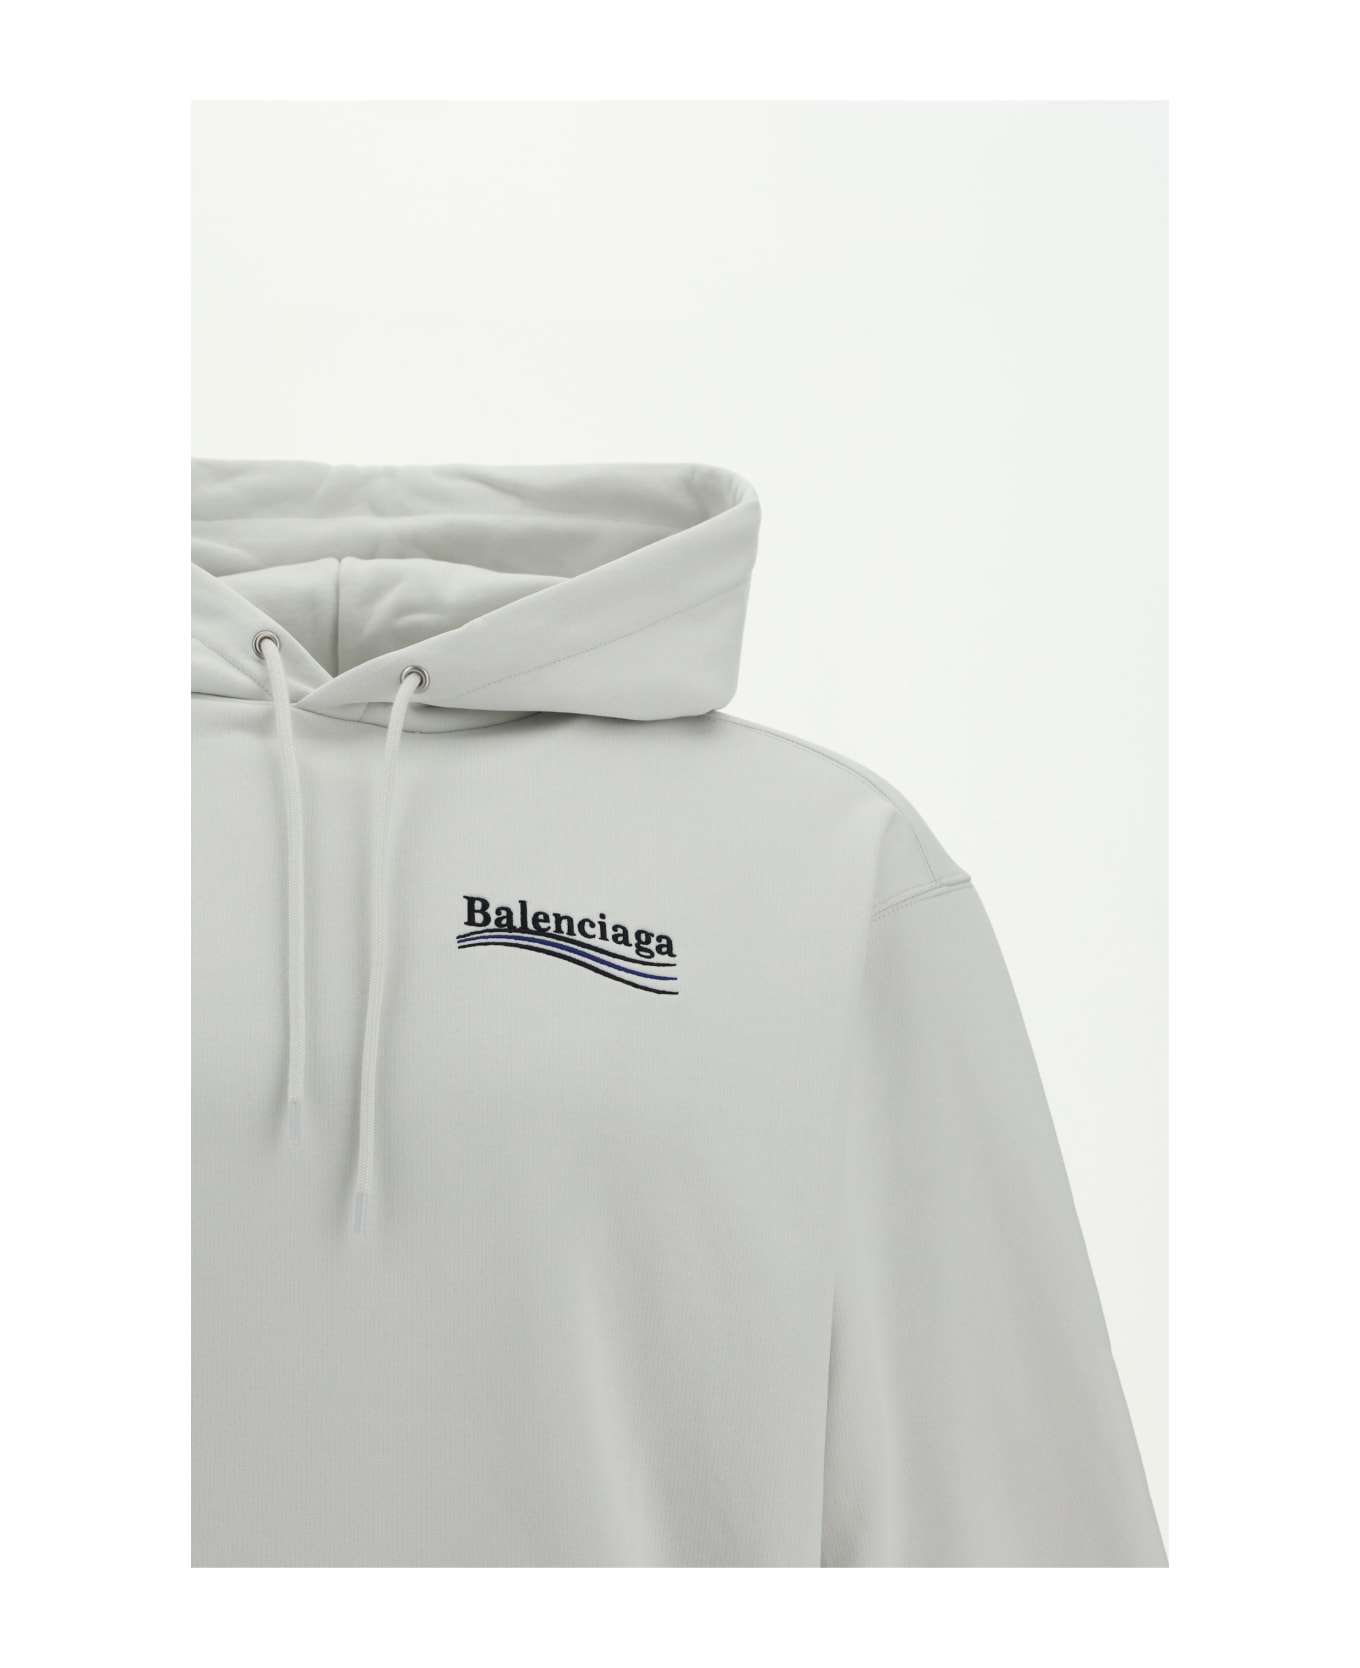 Balenciaga Sweatshirt With Hood And Logo - White